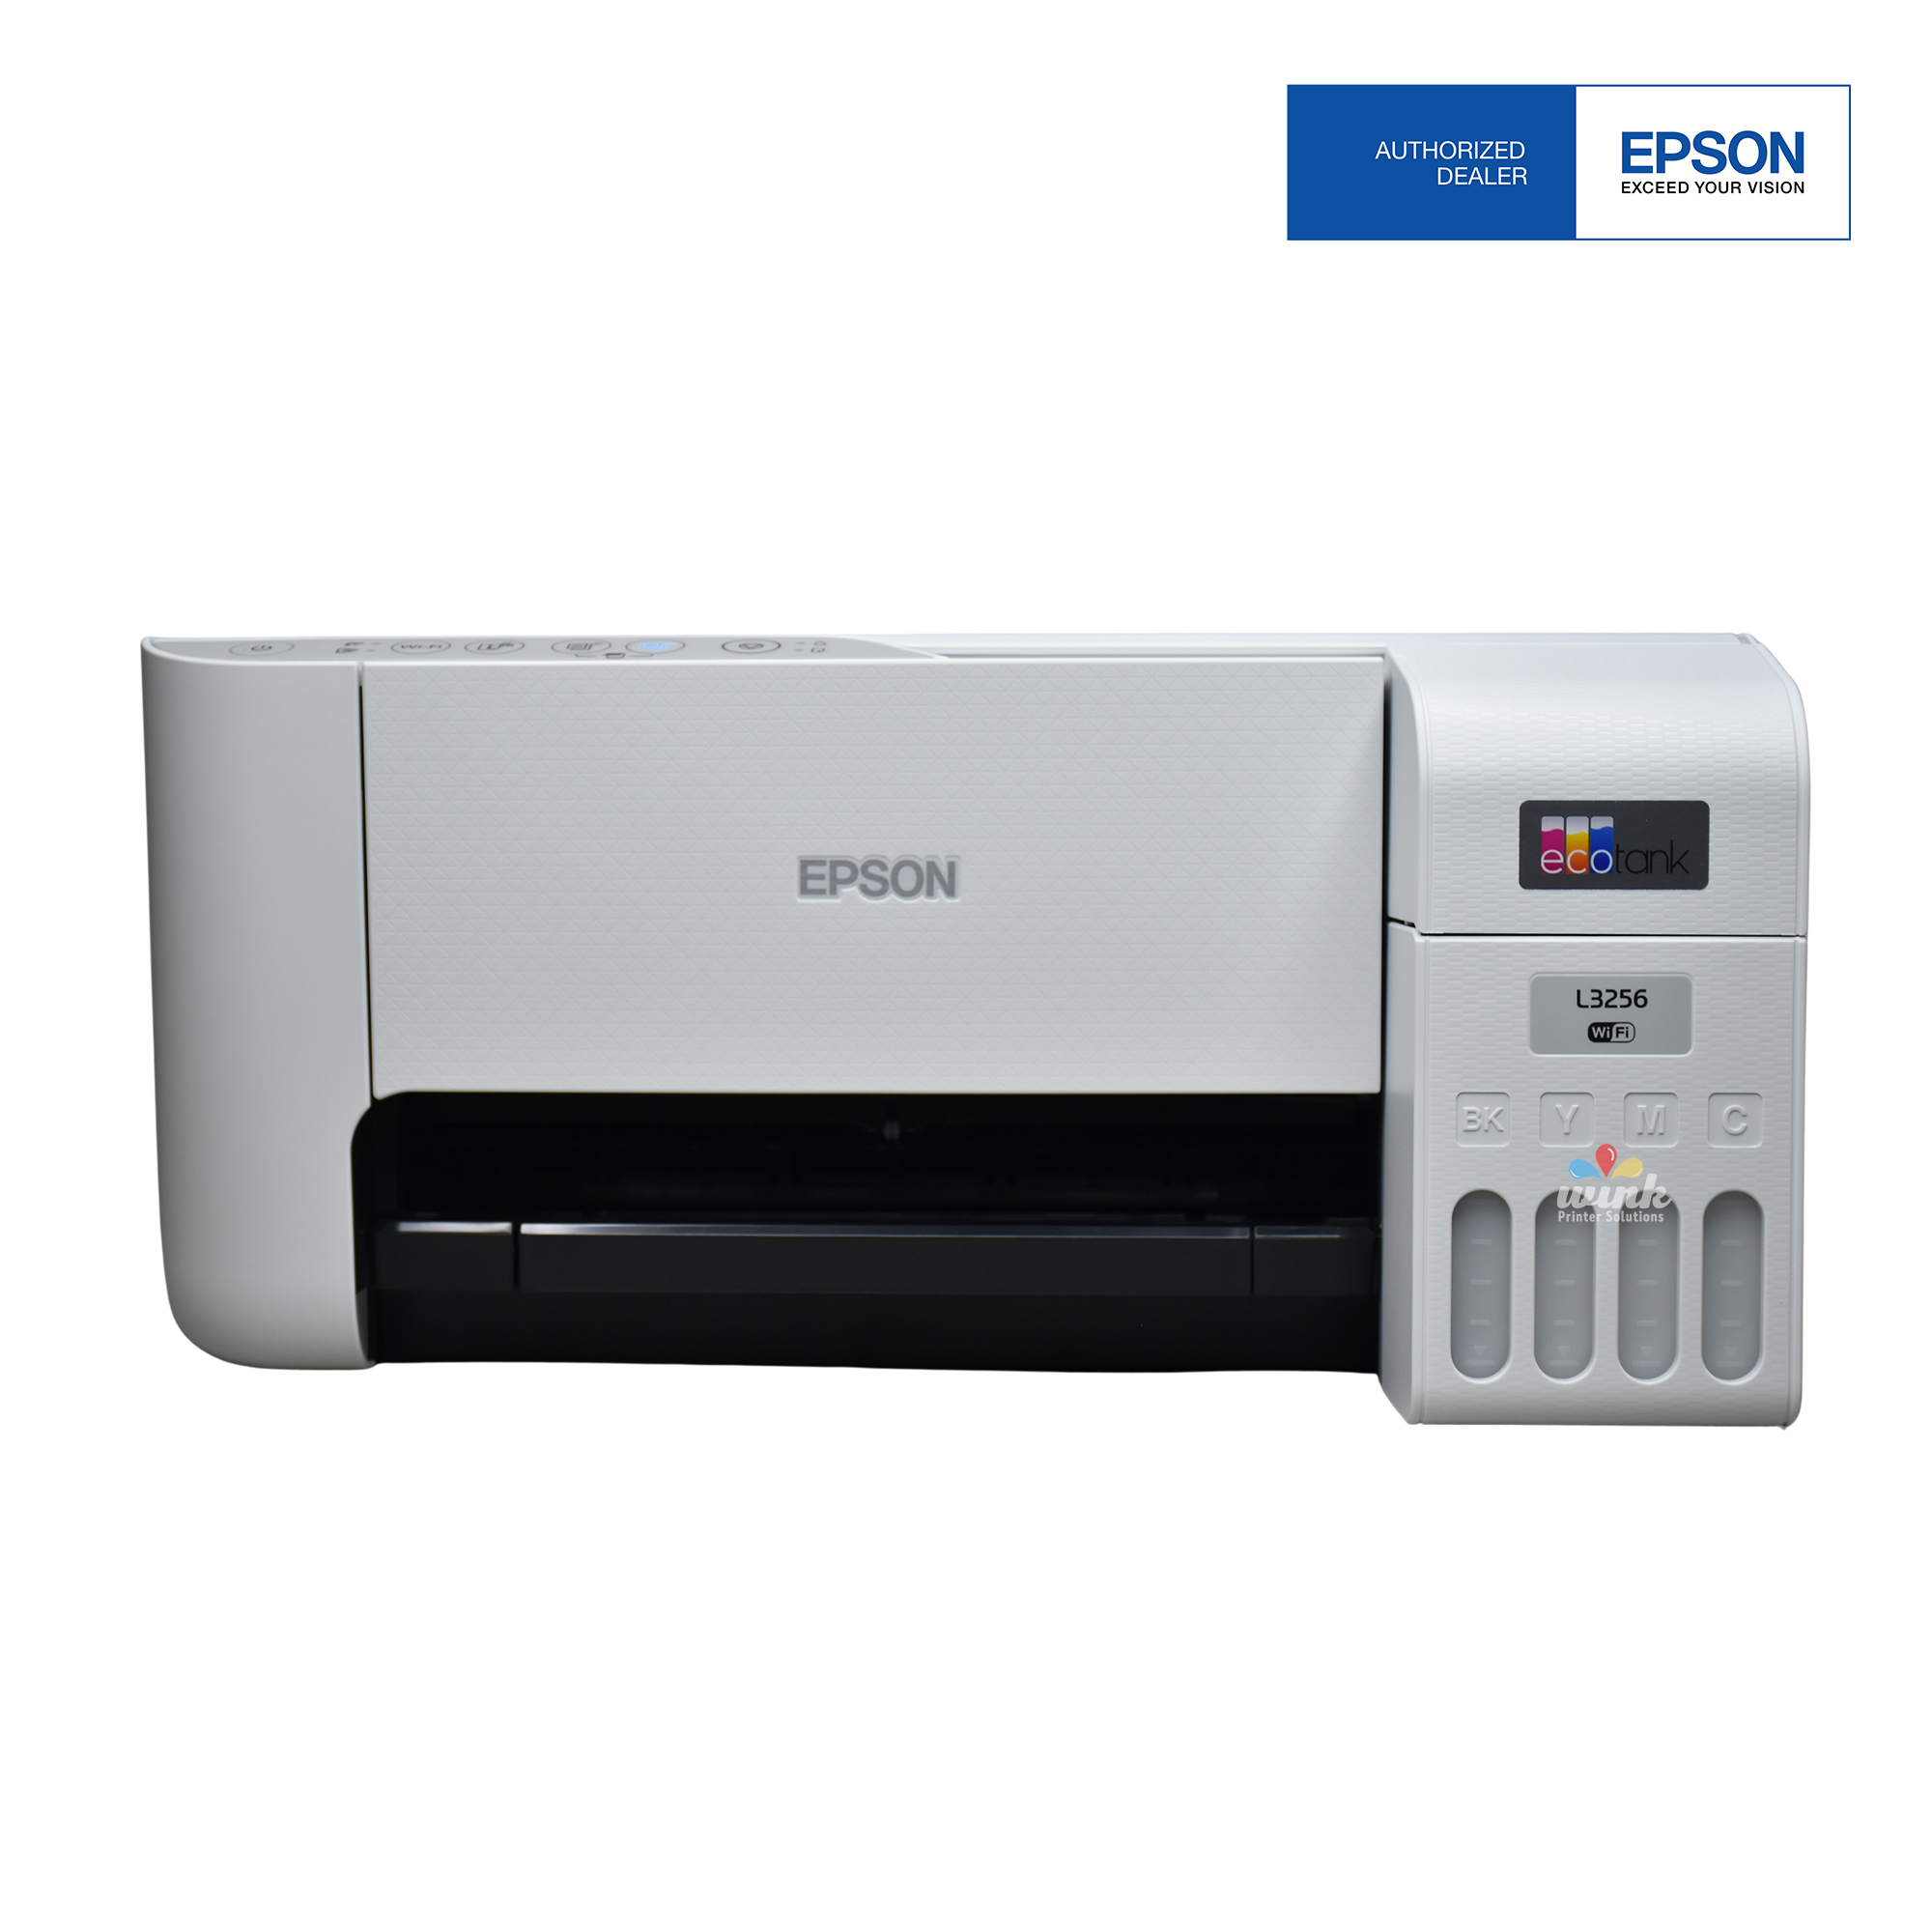 Epson L3256 Printer